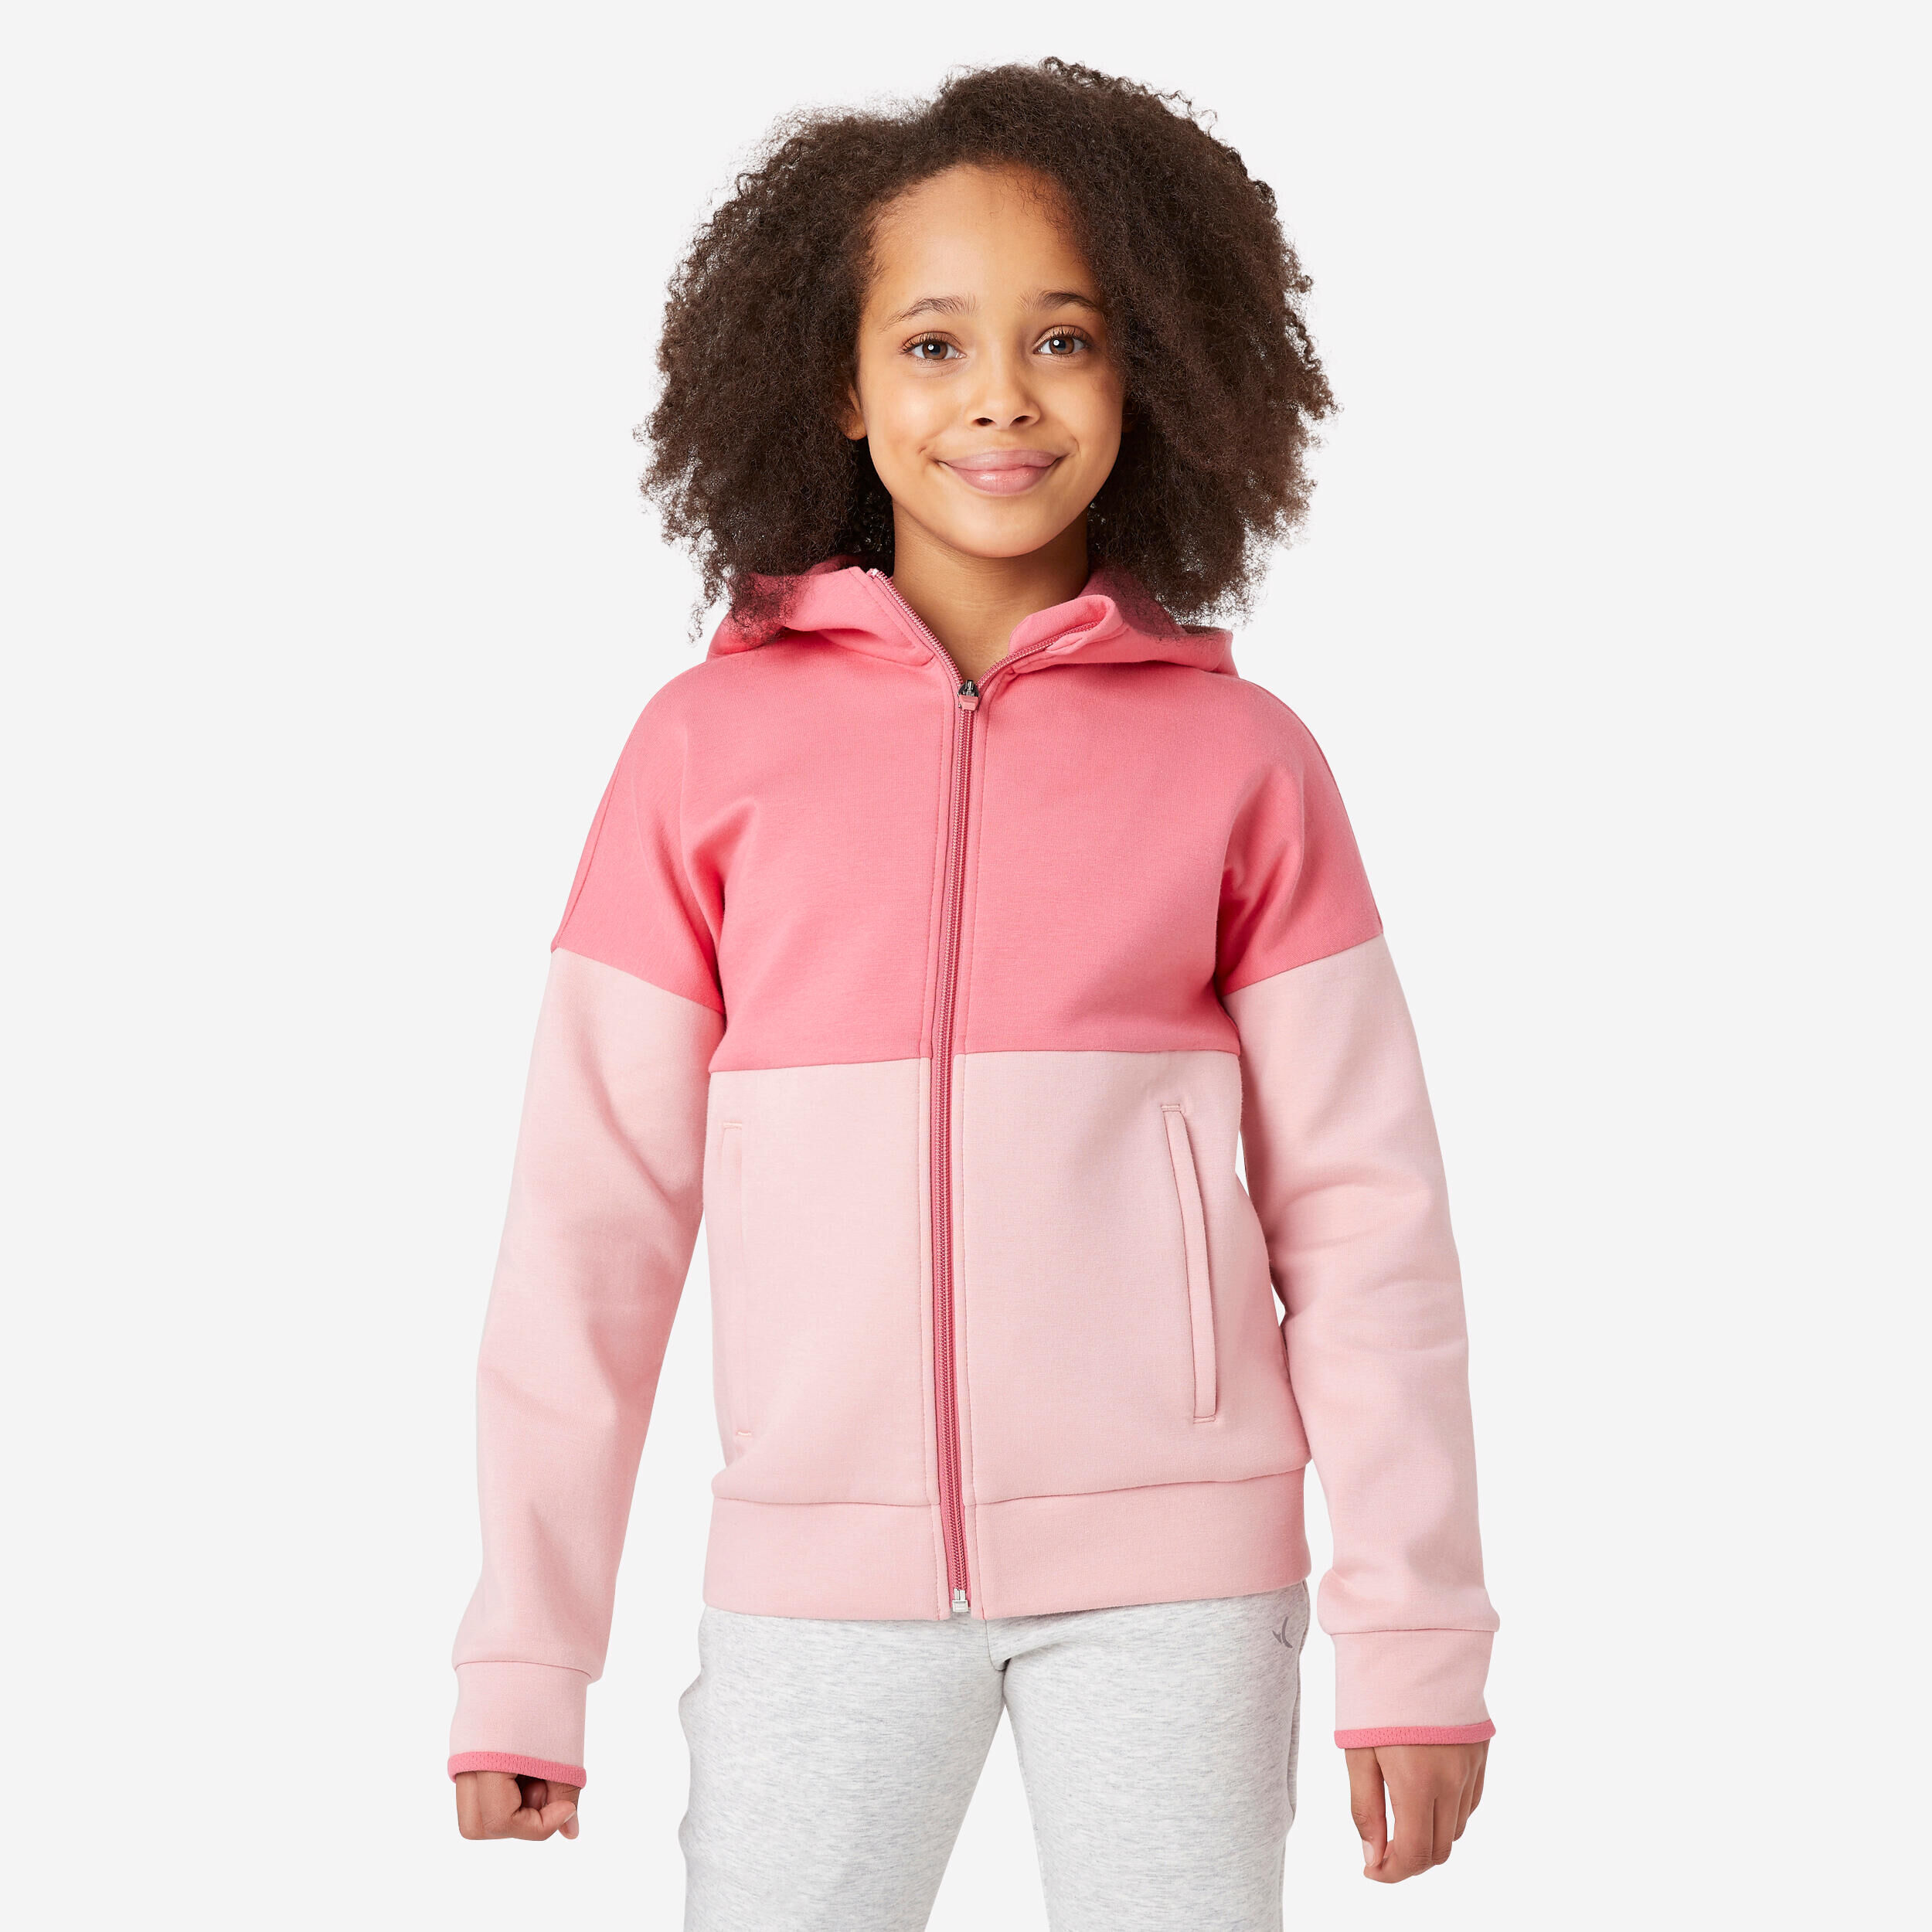 DOMYOS Kids' Breathable Zip-Up Cotton Hoodie 900 - Pink